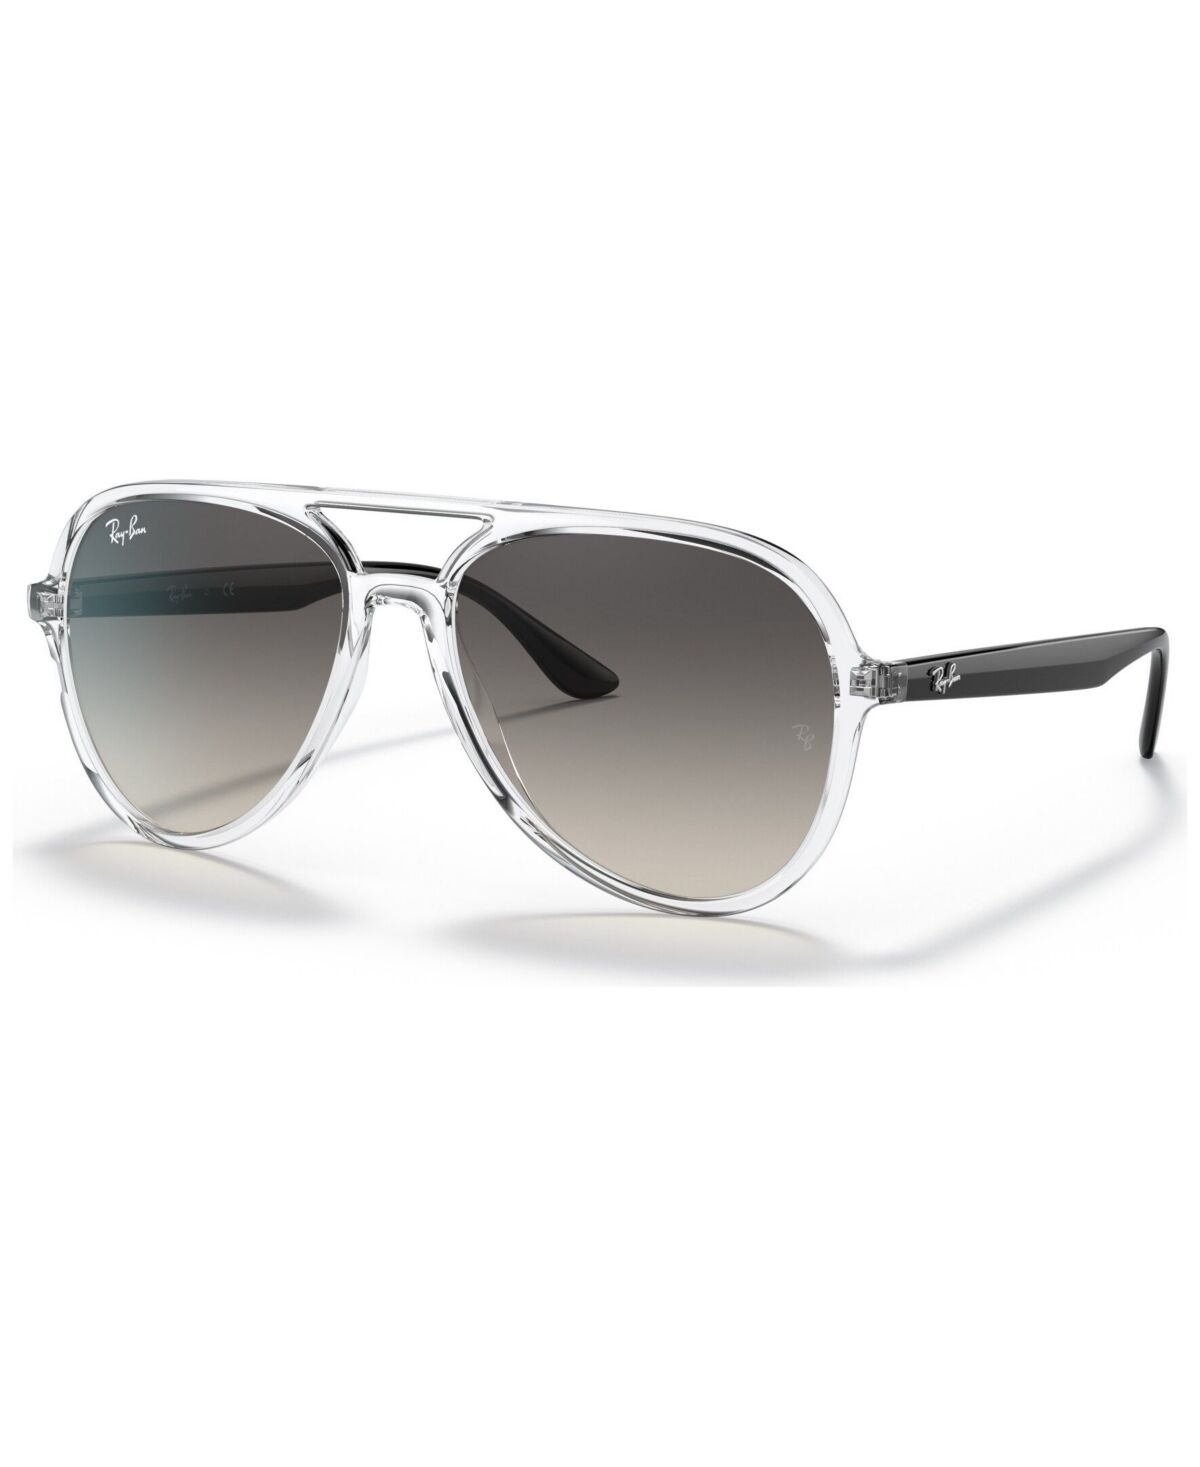 Ray-Ban Unisex Sunglasses, RB4376 - Transparent